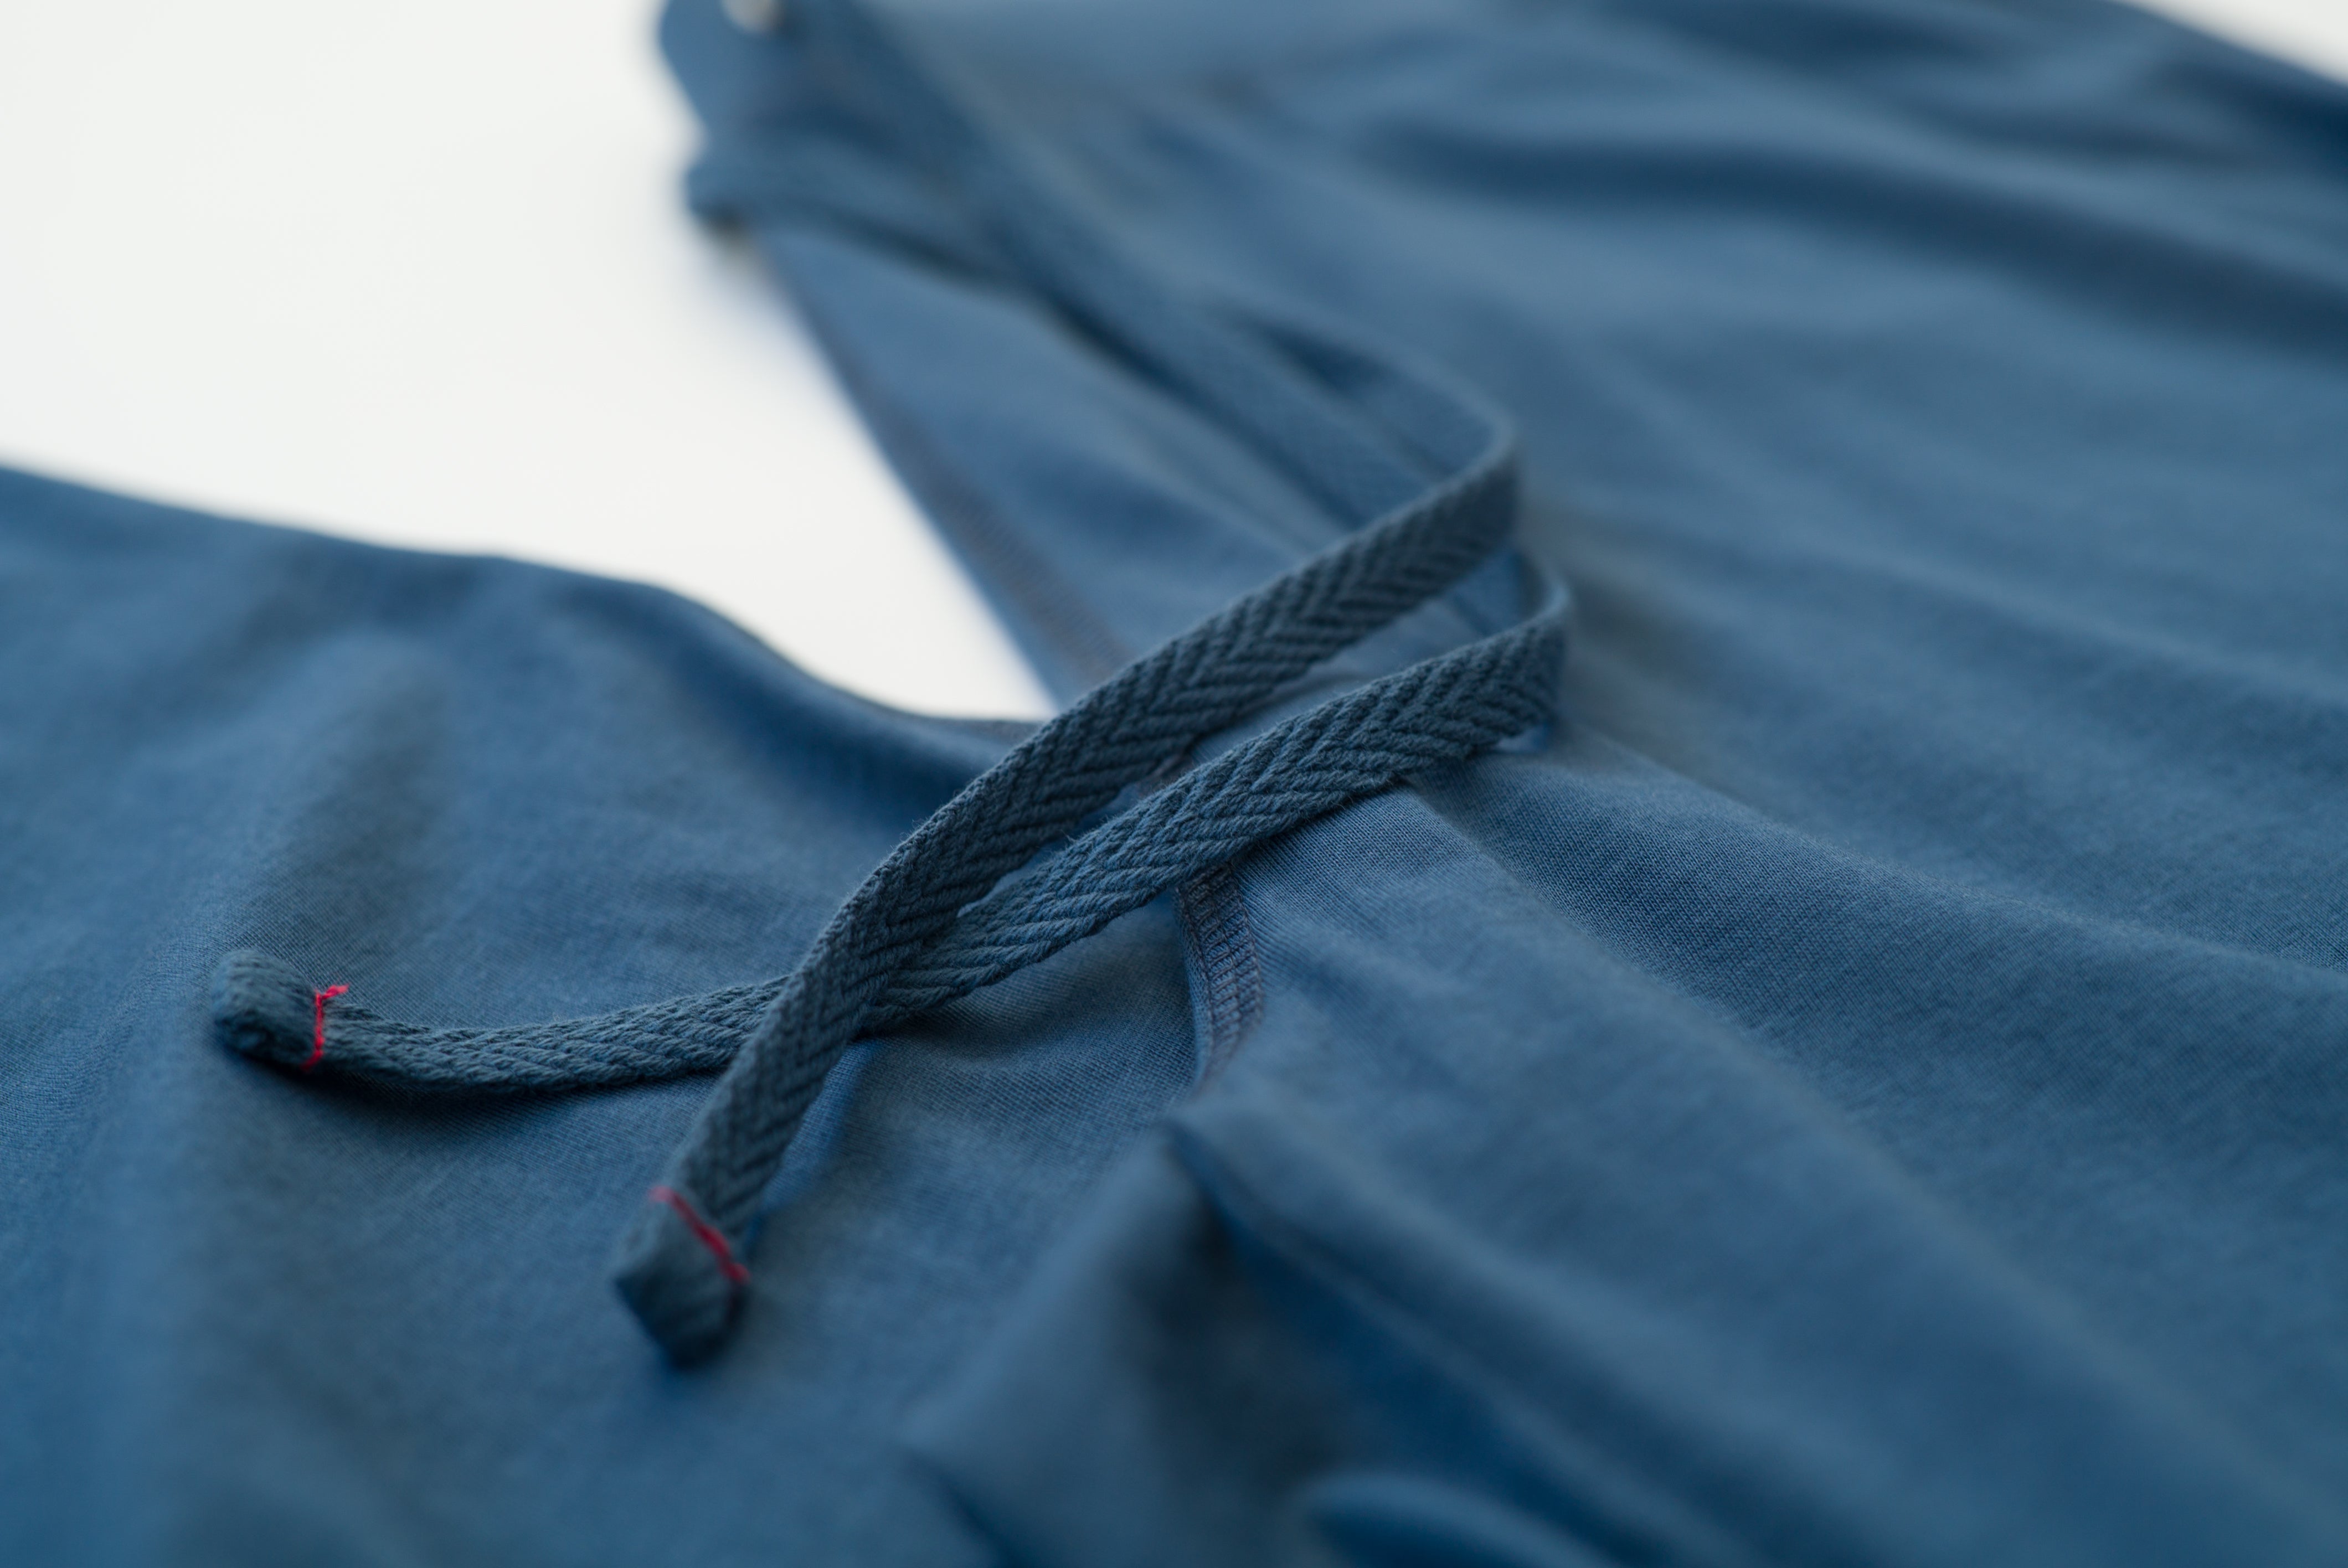 100% Peruvian Pima Cotton Denim Blue Pant